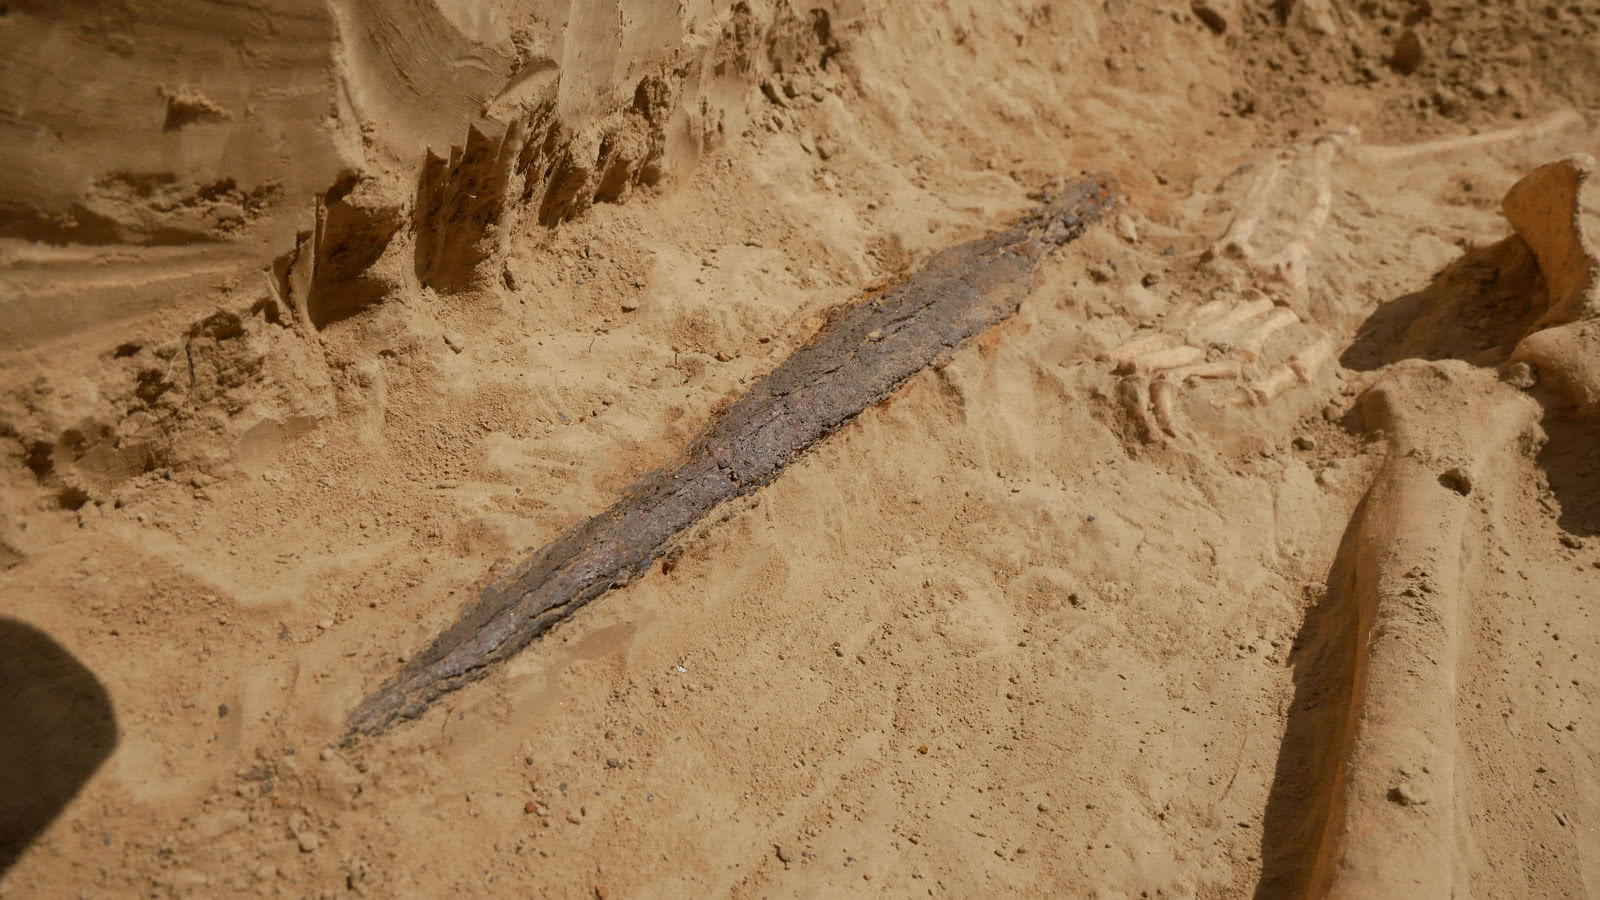 Gilded Scythian sword found on Mount Mamai in Zaporizhzhia Oblast ~~